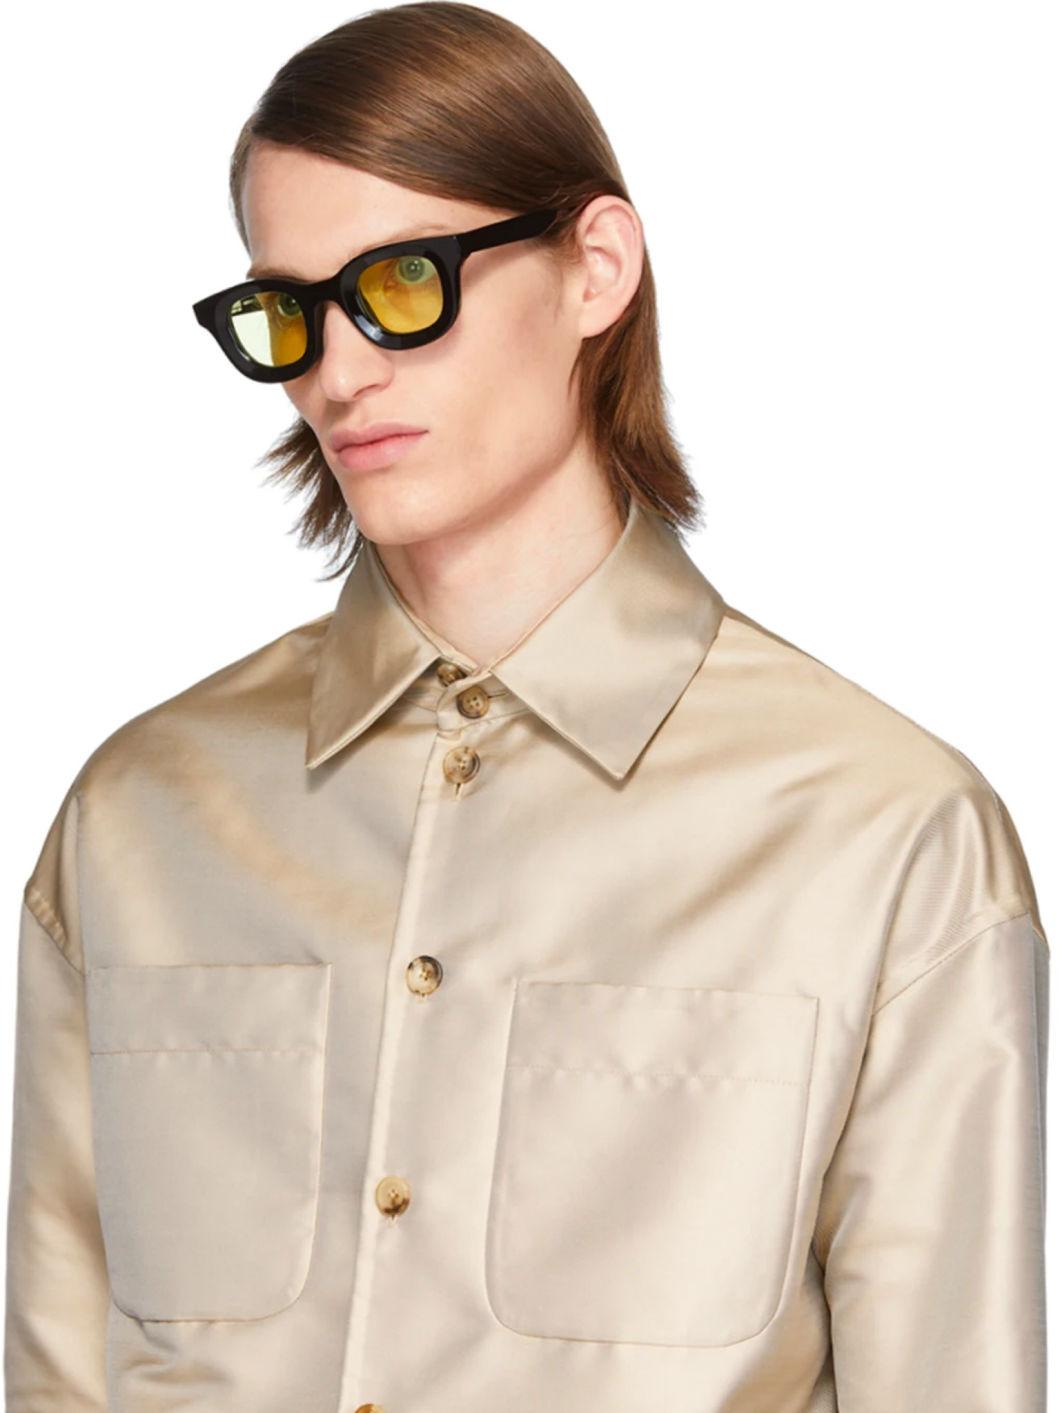 2022 Pre-Sale Exclusive Designer Style Thick Acetate Cr39 Sunglasses Round Fashion Popular Sunglasses Designer Top Sunglasses